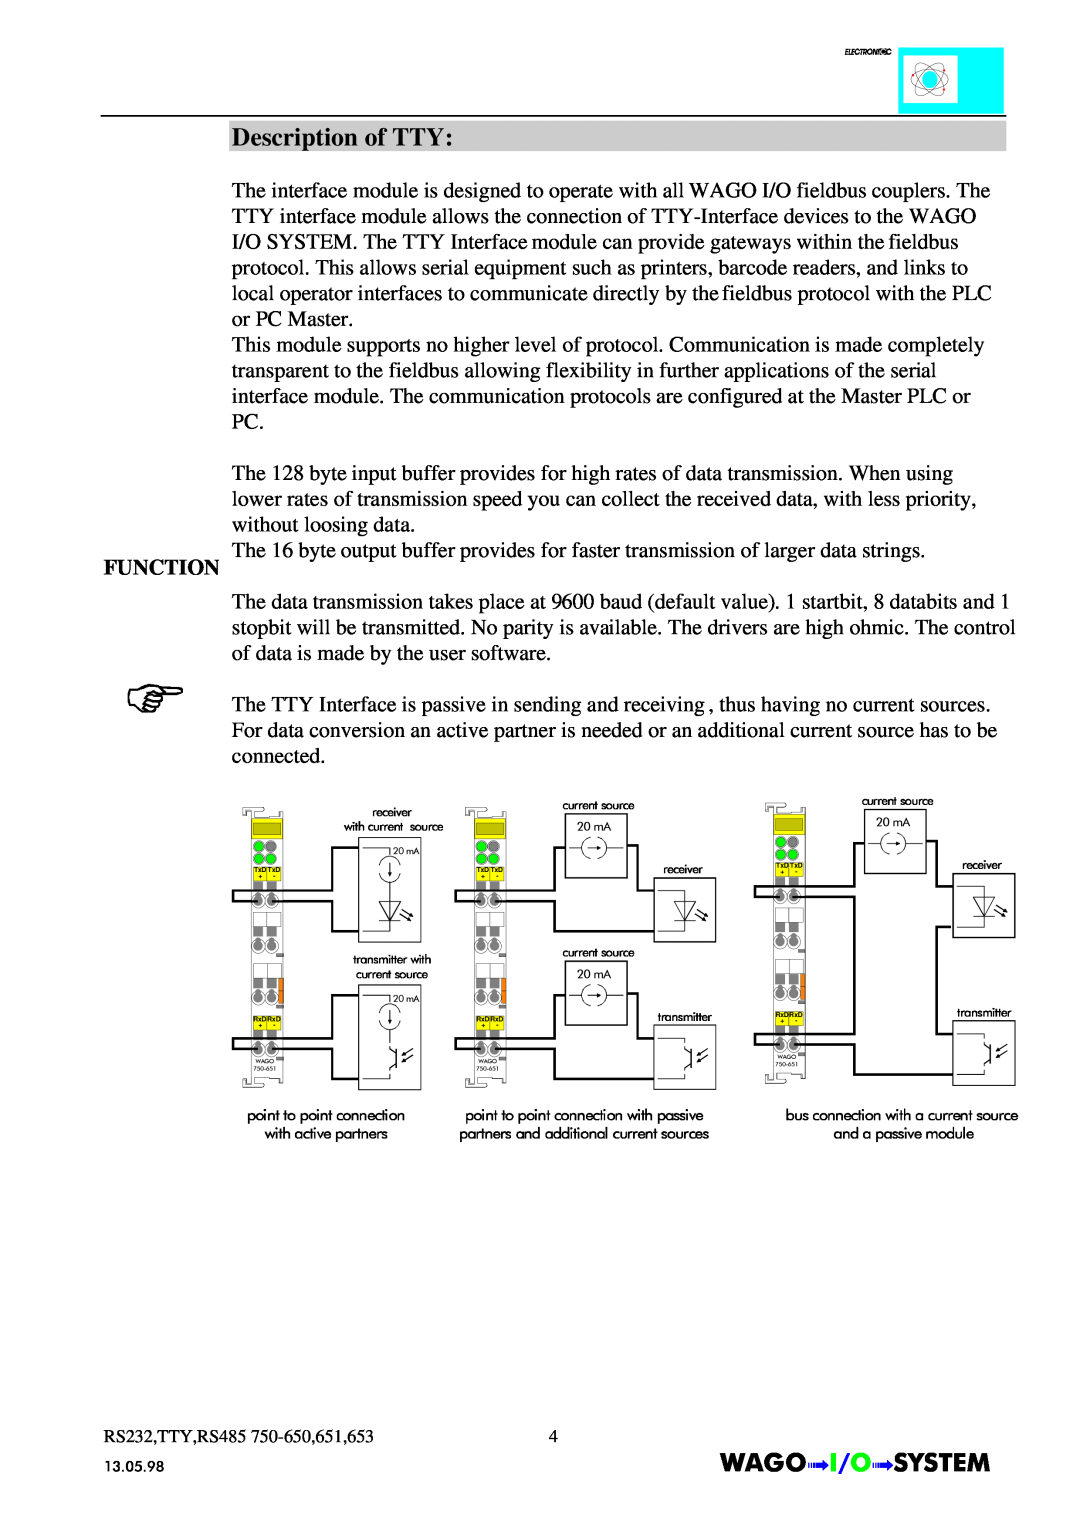 Quatech INTERBUS S manual Description of TTY, Function 